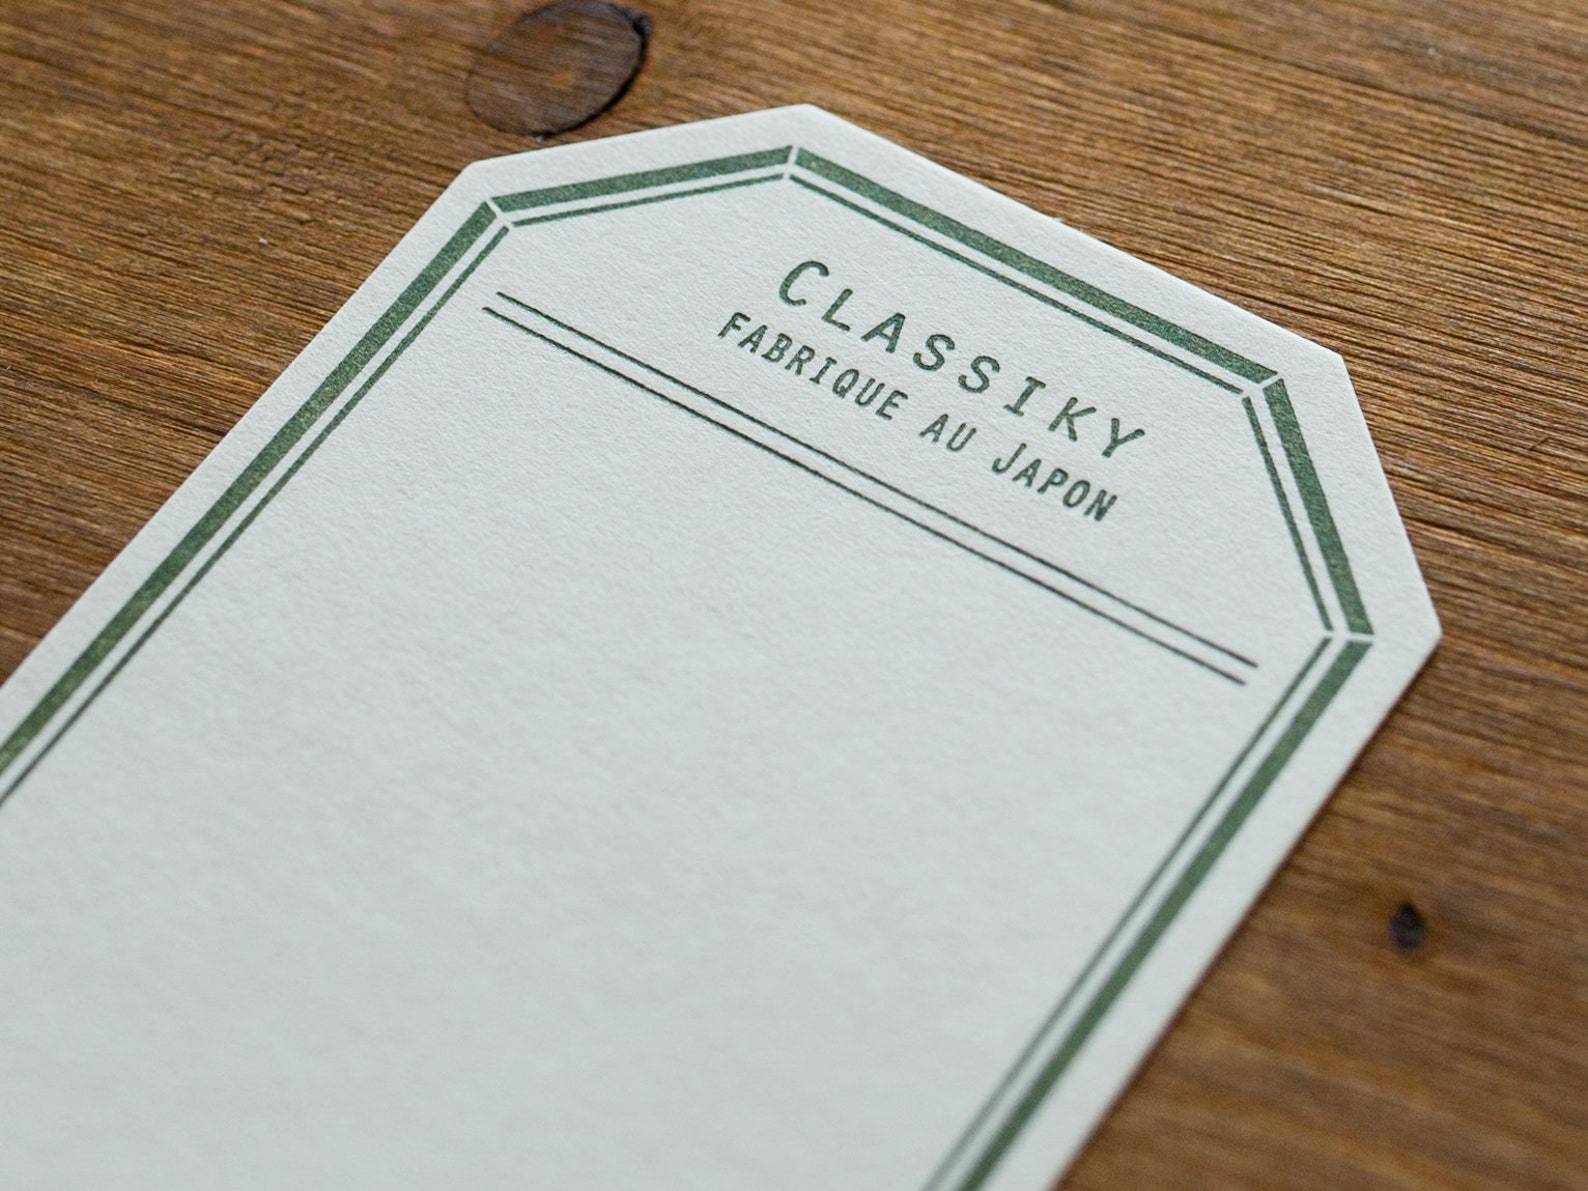 Classiky - Letterpress Label Card (Green) - 20 stuks-Letterpress-DutchMills